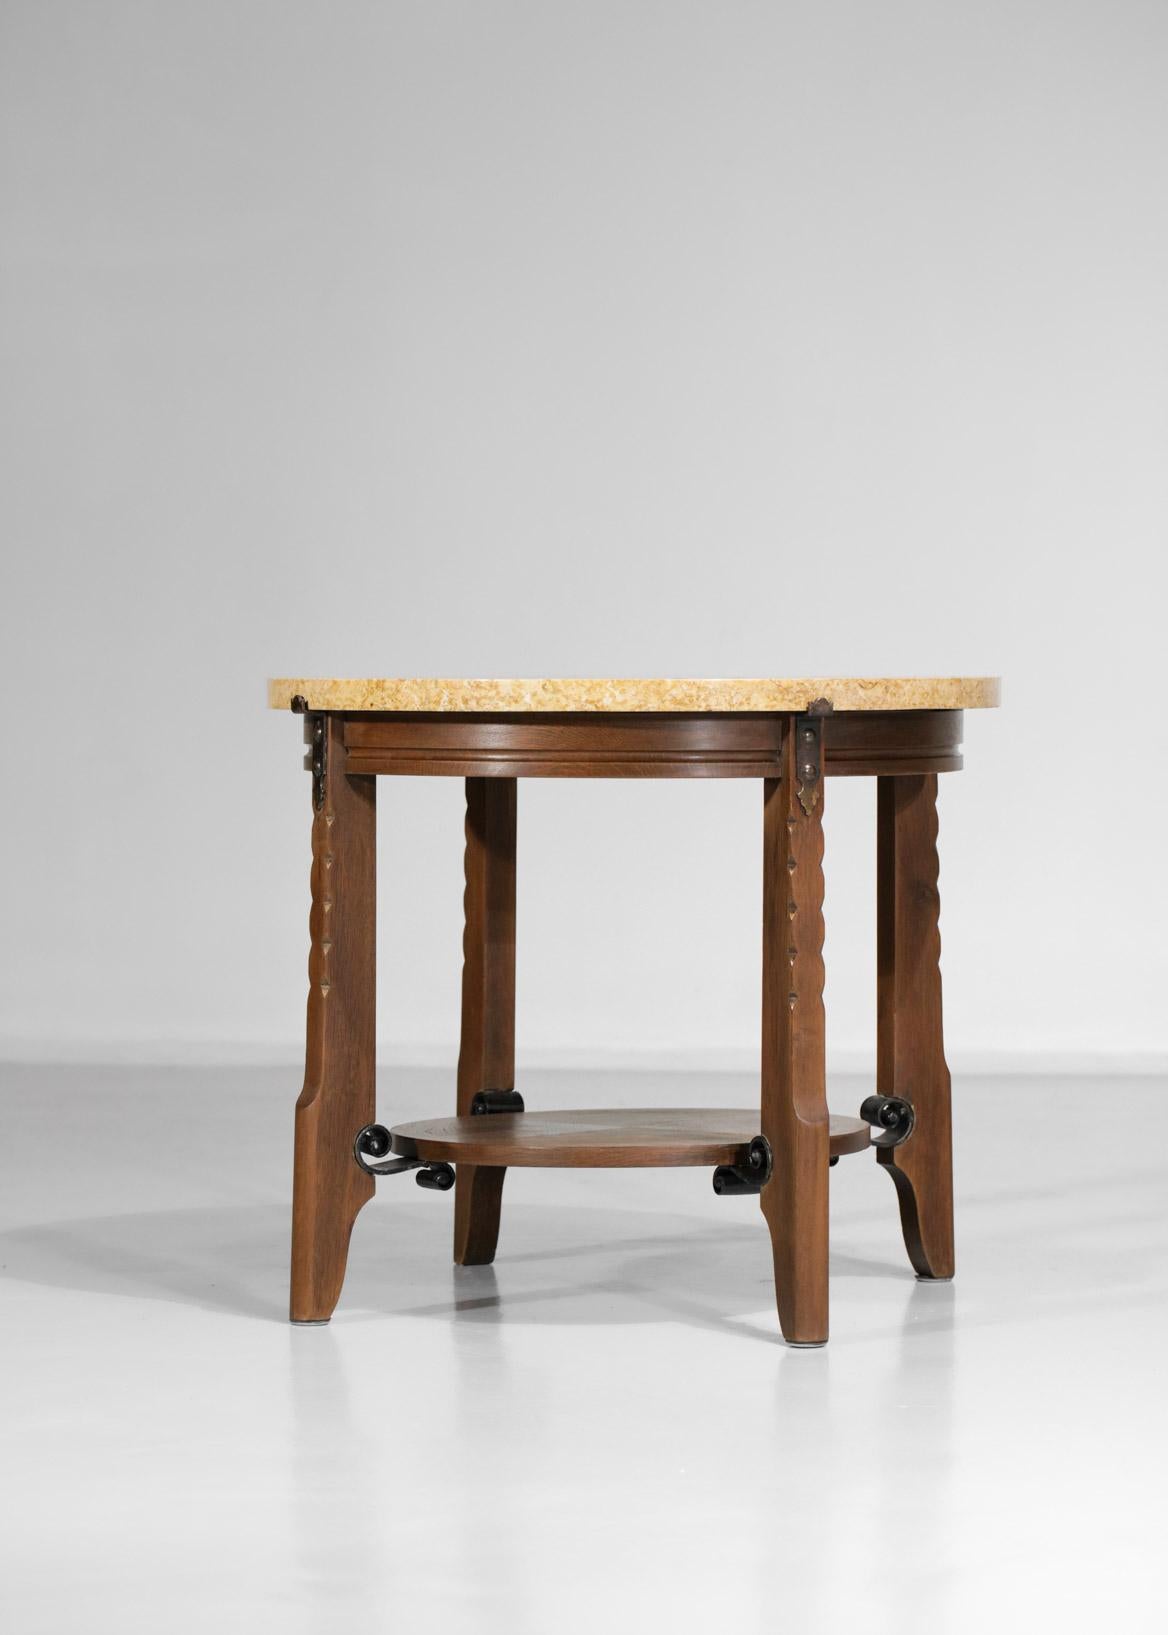 Metal Oak and Travertine Art Deco Coffee Table 1930's Gueridon, E556 For Sale